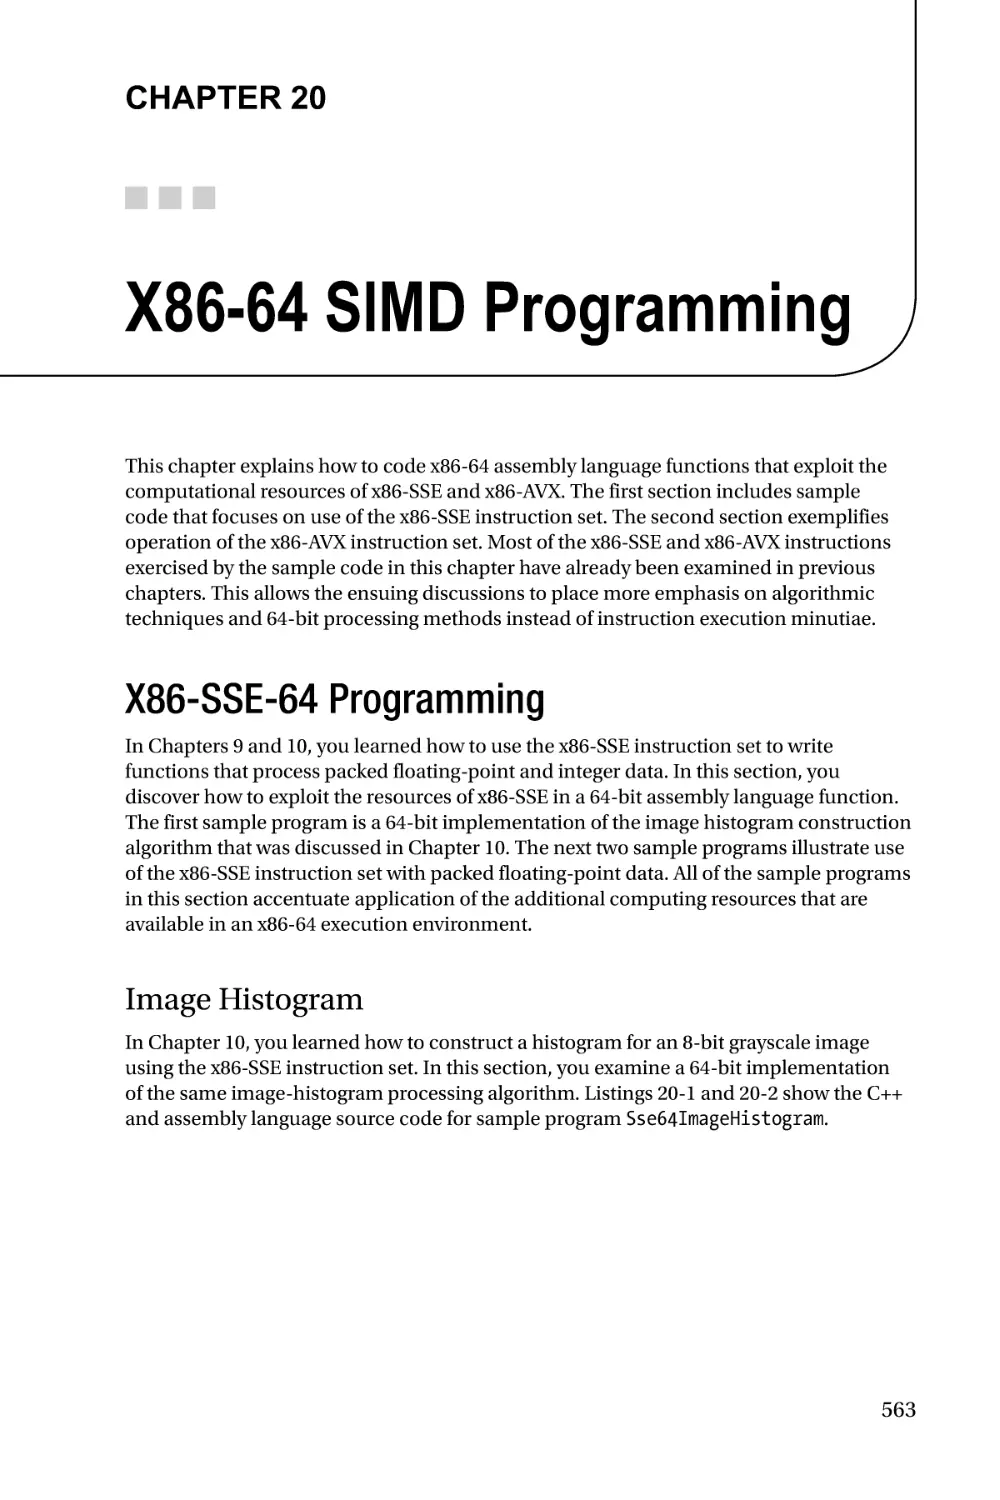 Chapter 20
X86-SSE-64 Programming
Image Histogram